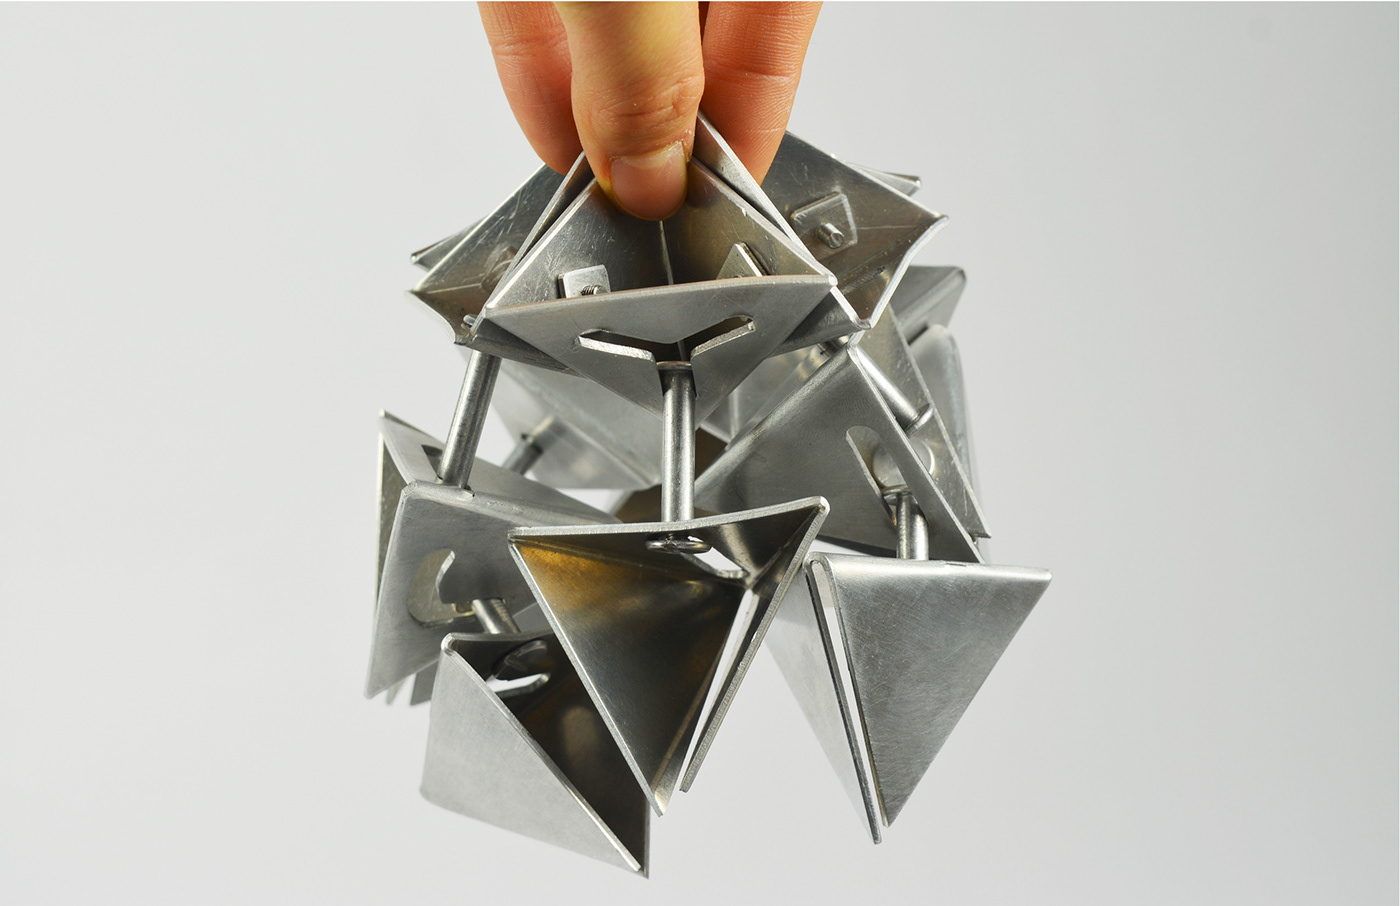 metal aluminum sculpture Metals 1 risd geometry